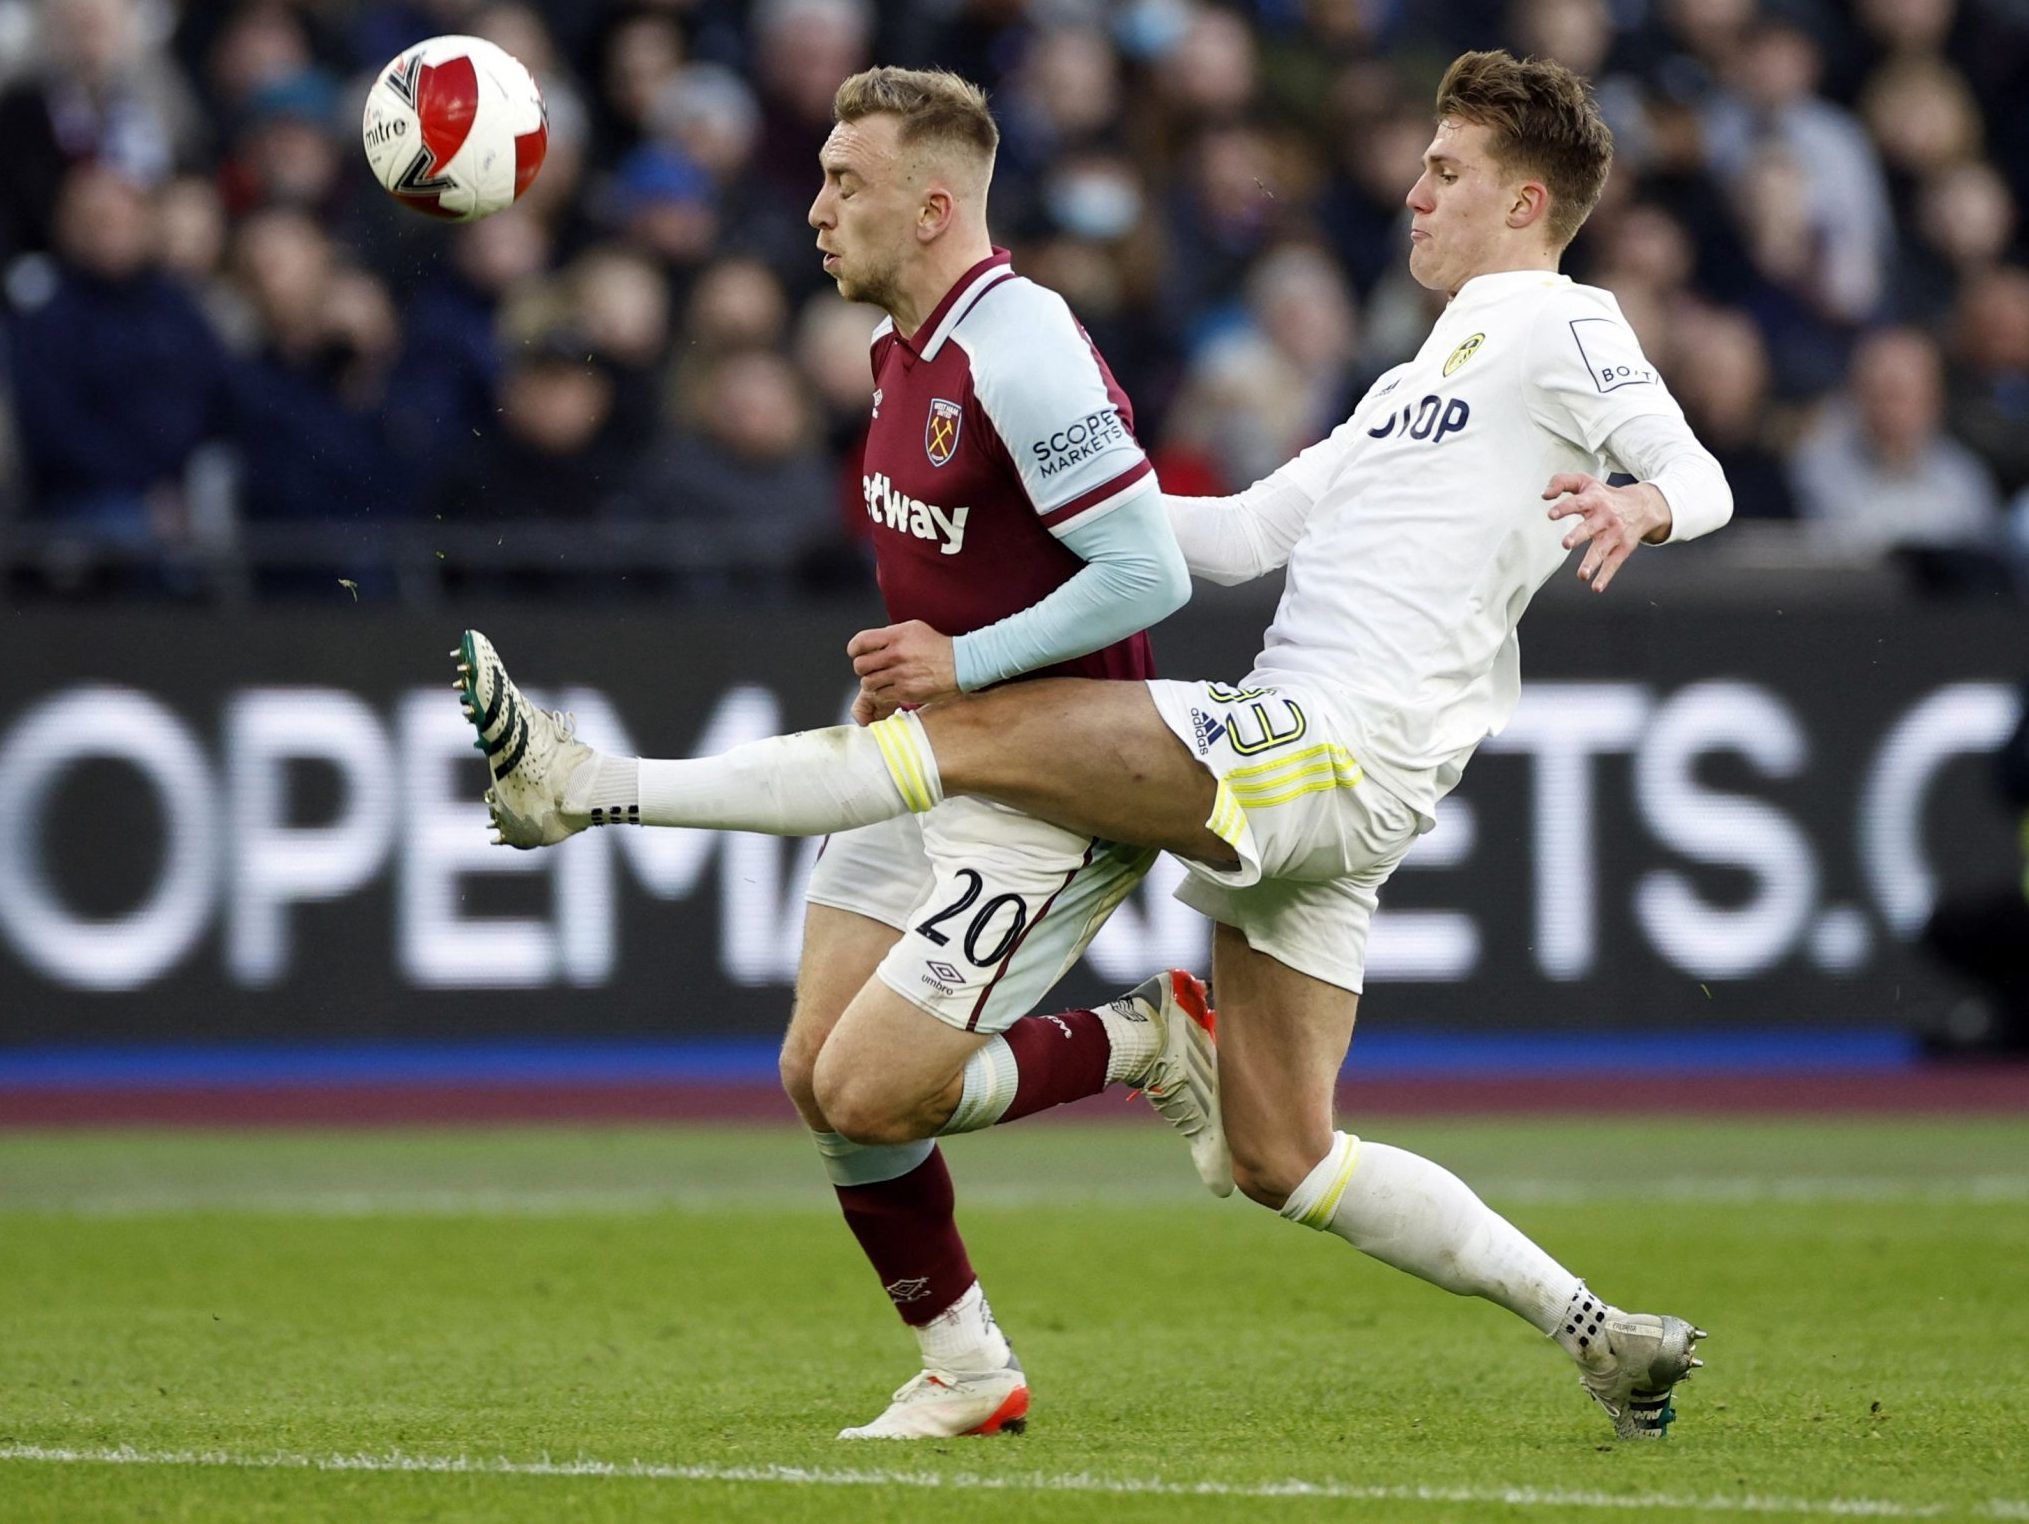 Leeds United defender Leo Hjelde in action against West Ham United